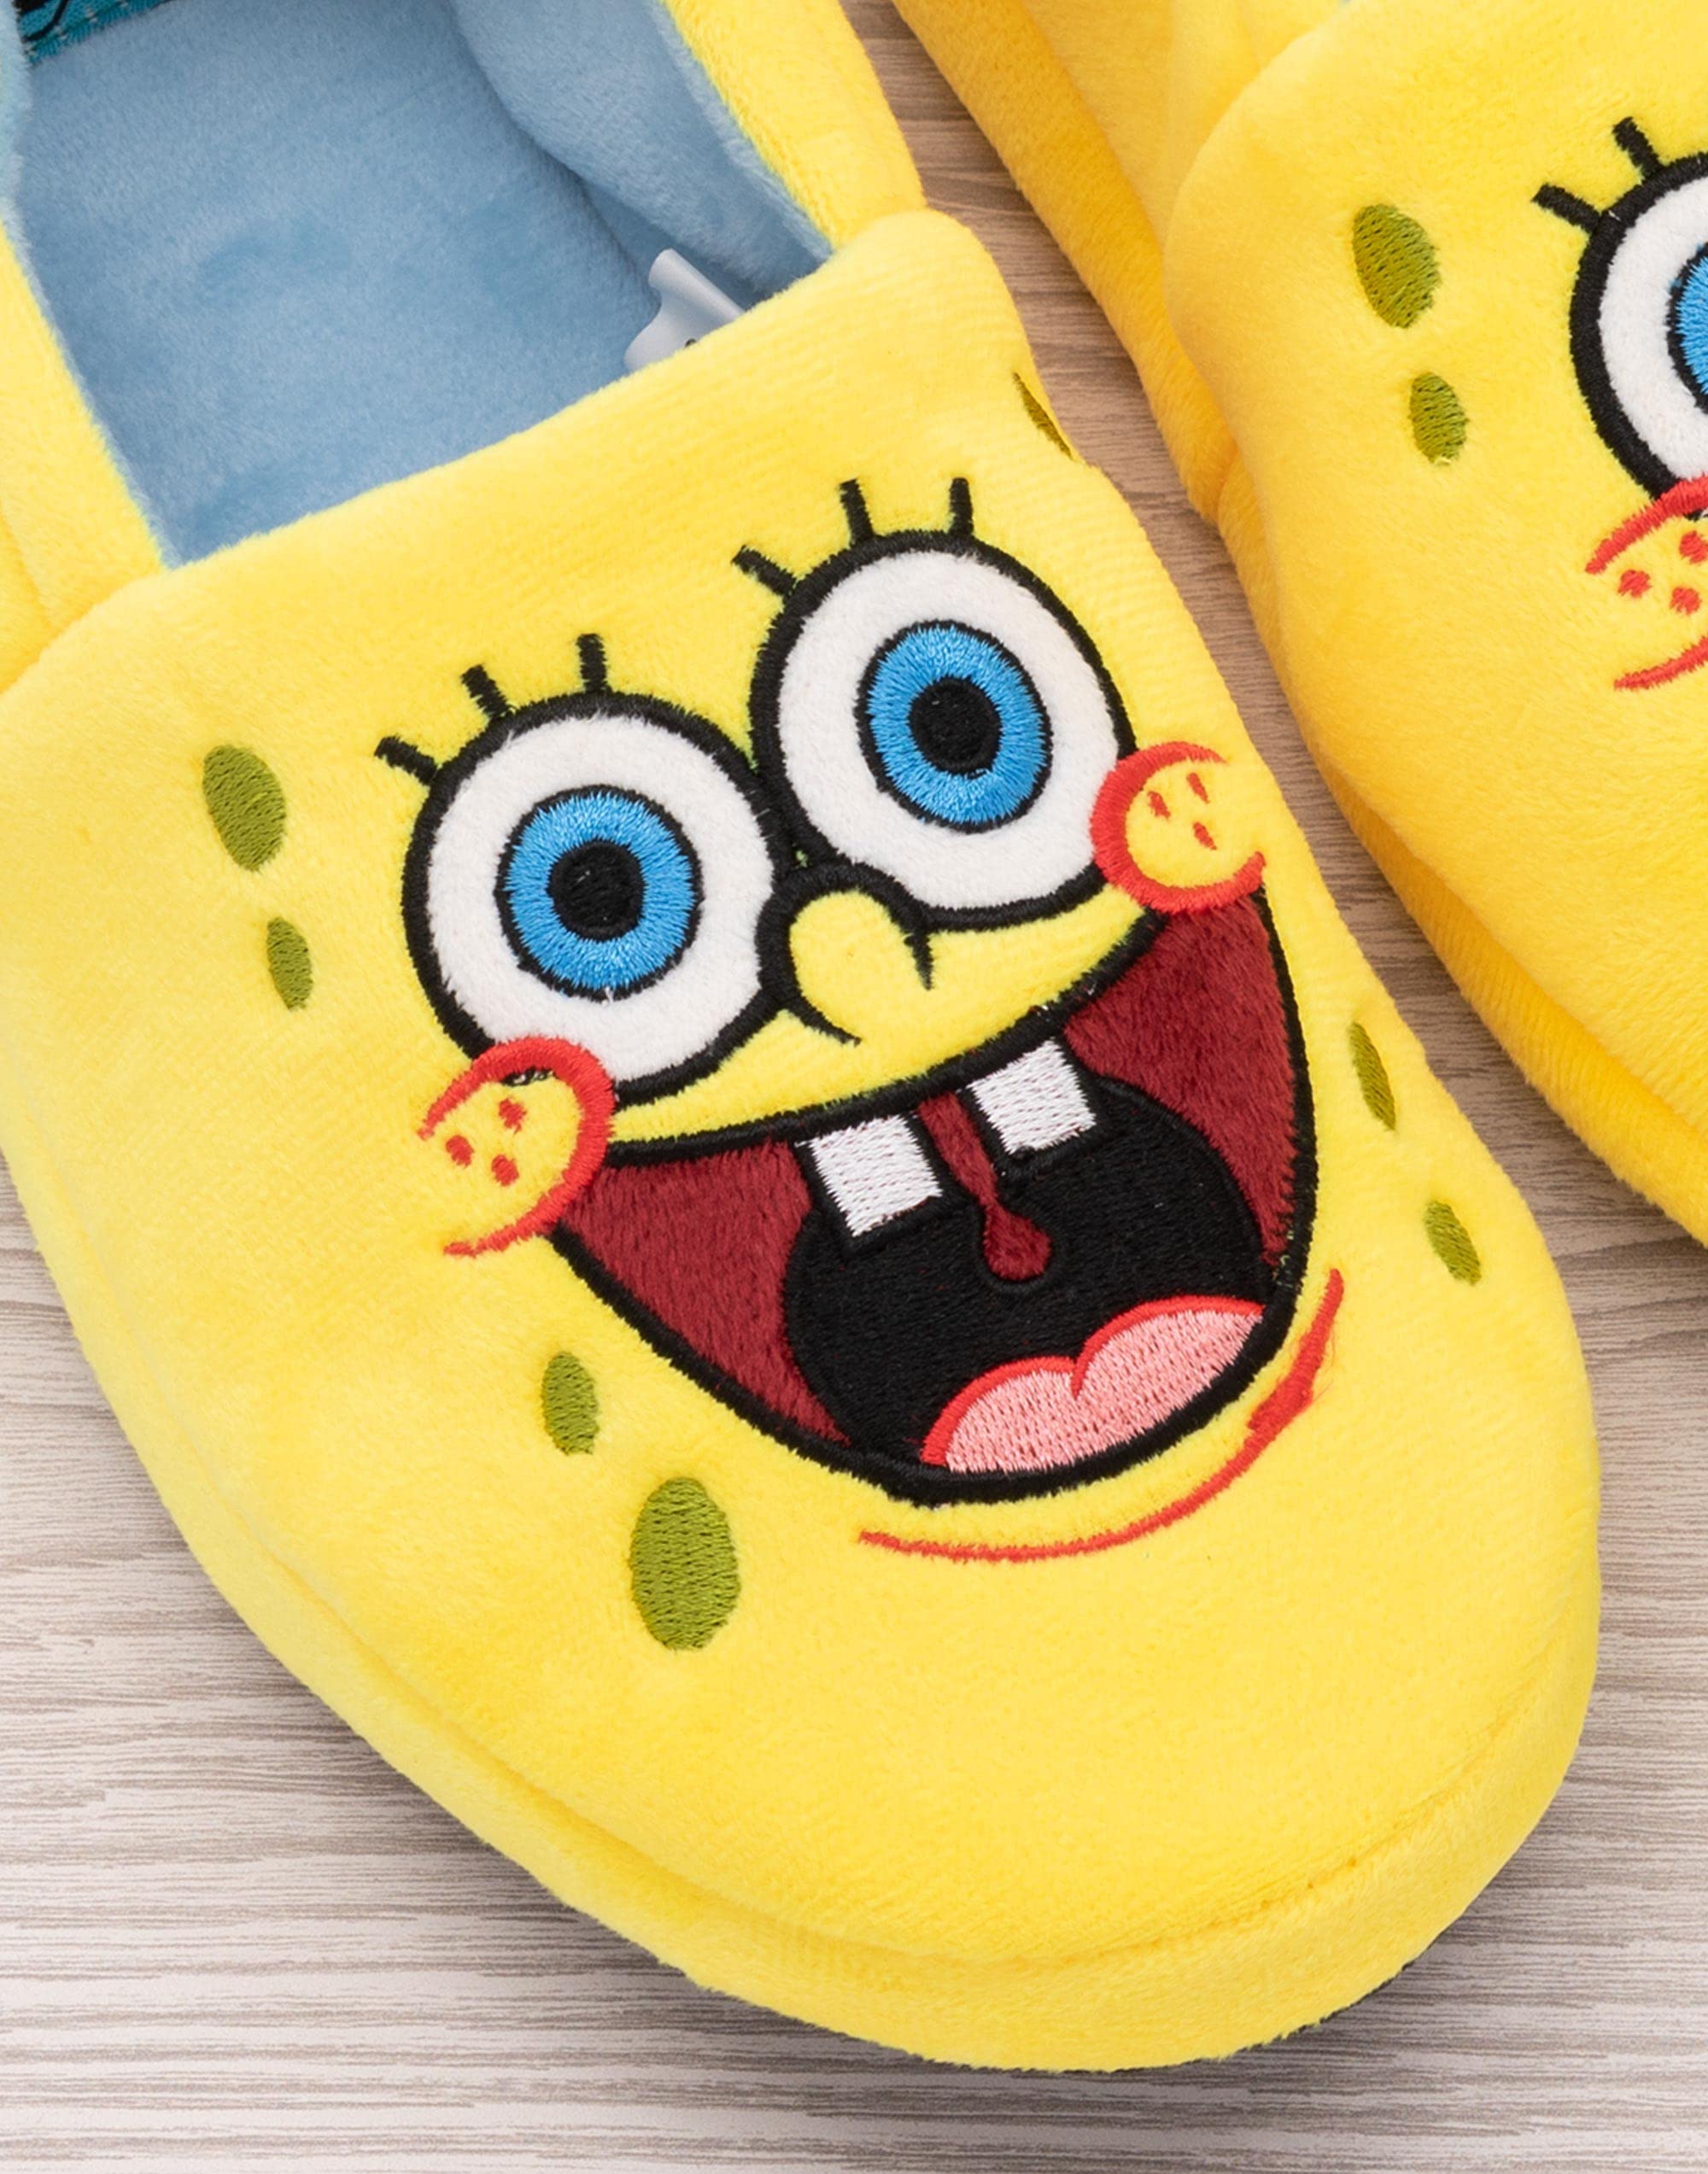 SpongeBob SquarePants Kids Slippers Character Yellow House Sliders